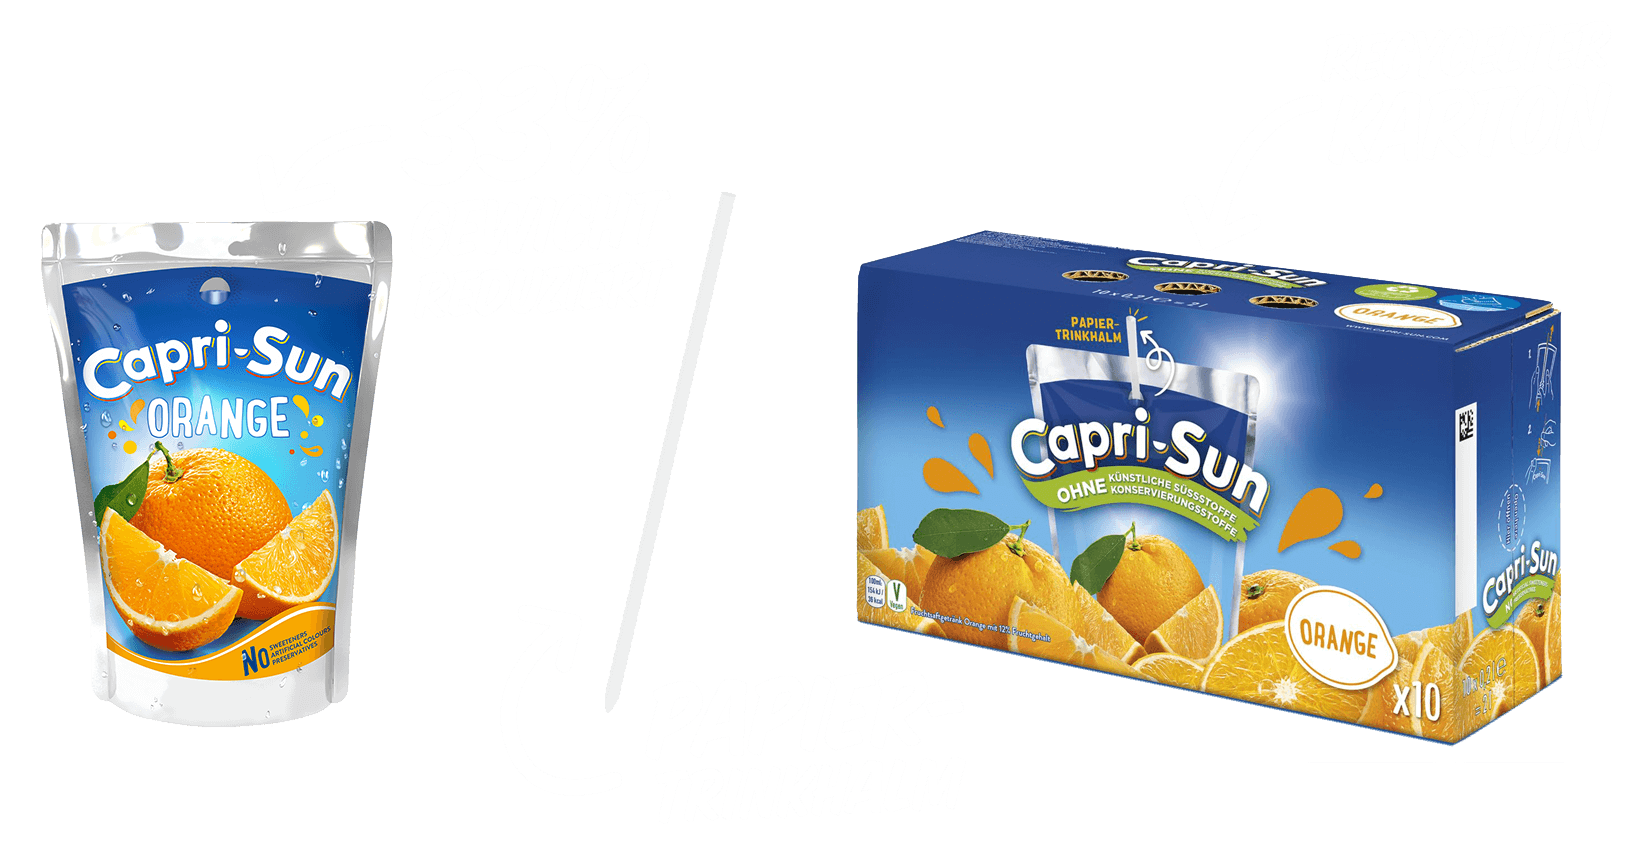 Capri-Sun_Packaging_02_DE